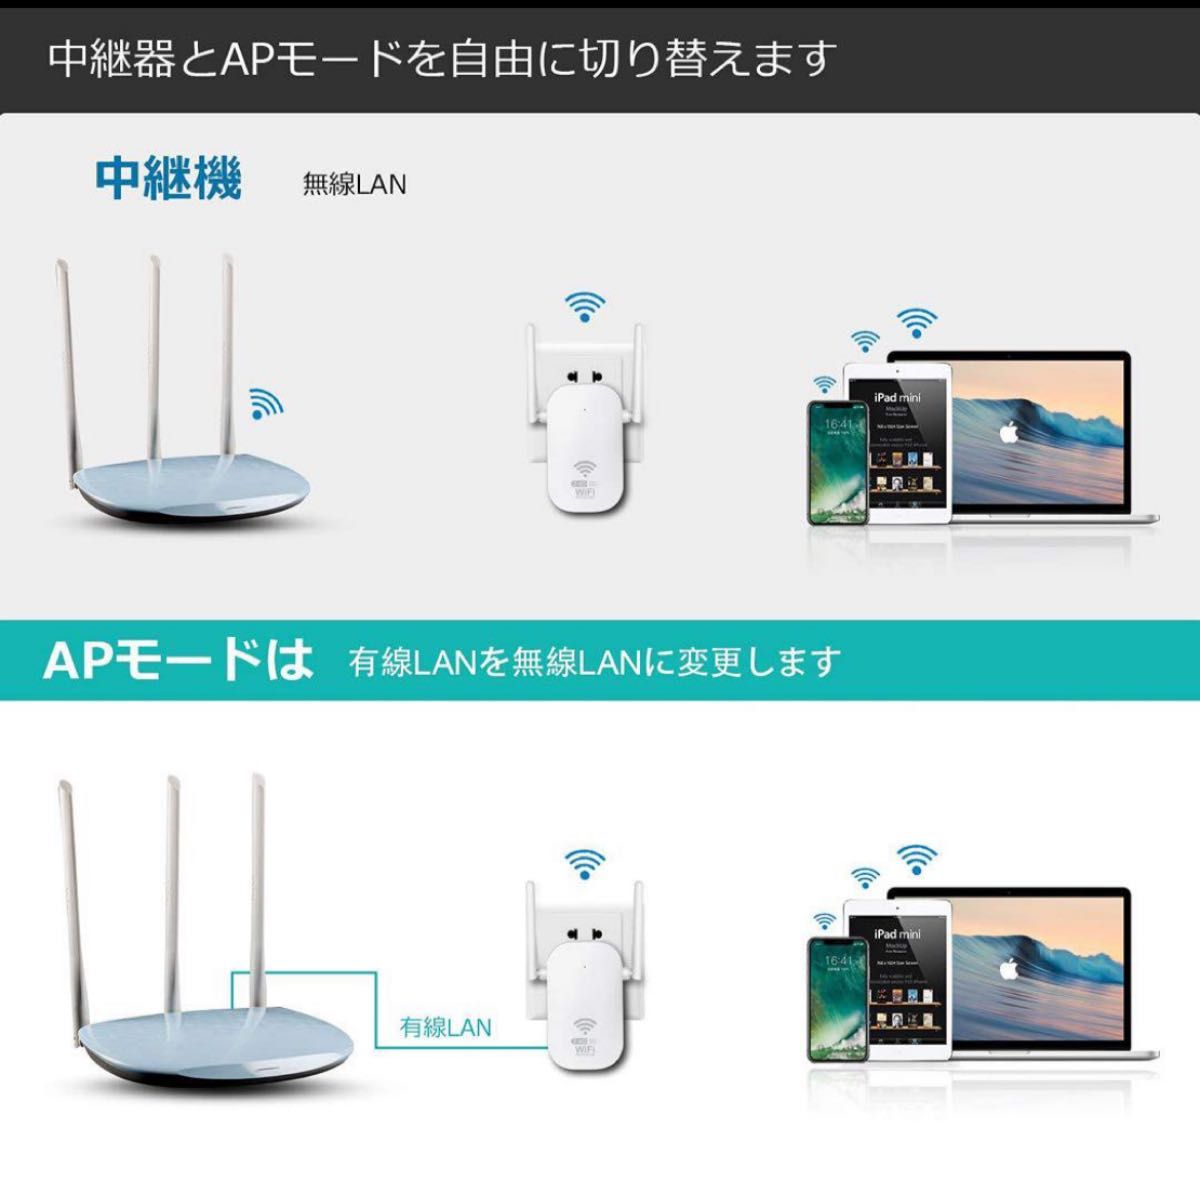 WIFI 中継機 WiFi 無線LAN 中継器 11ac対応 AC1200